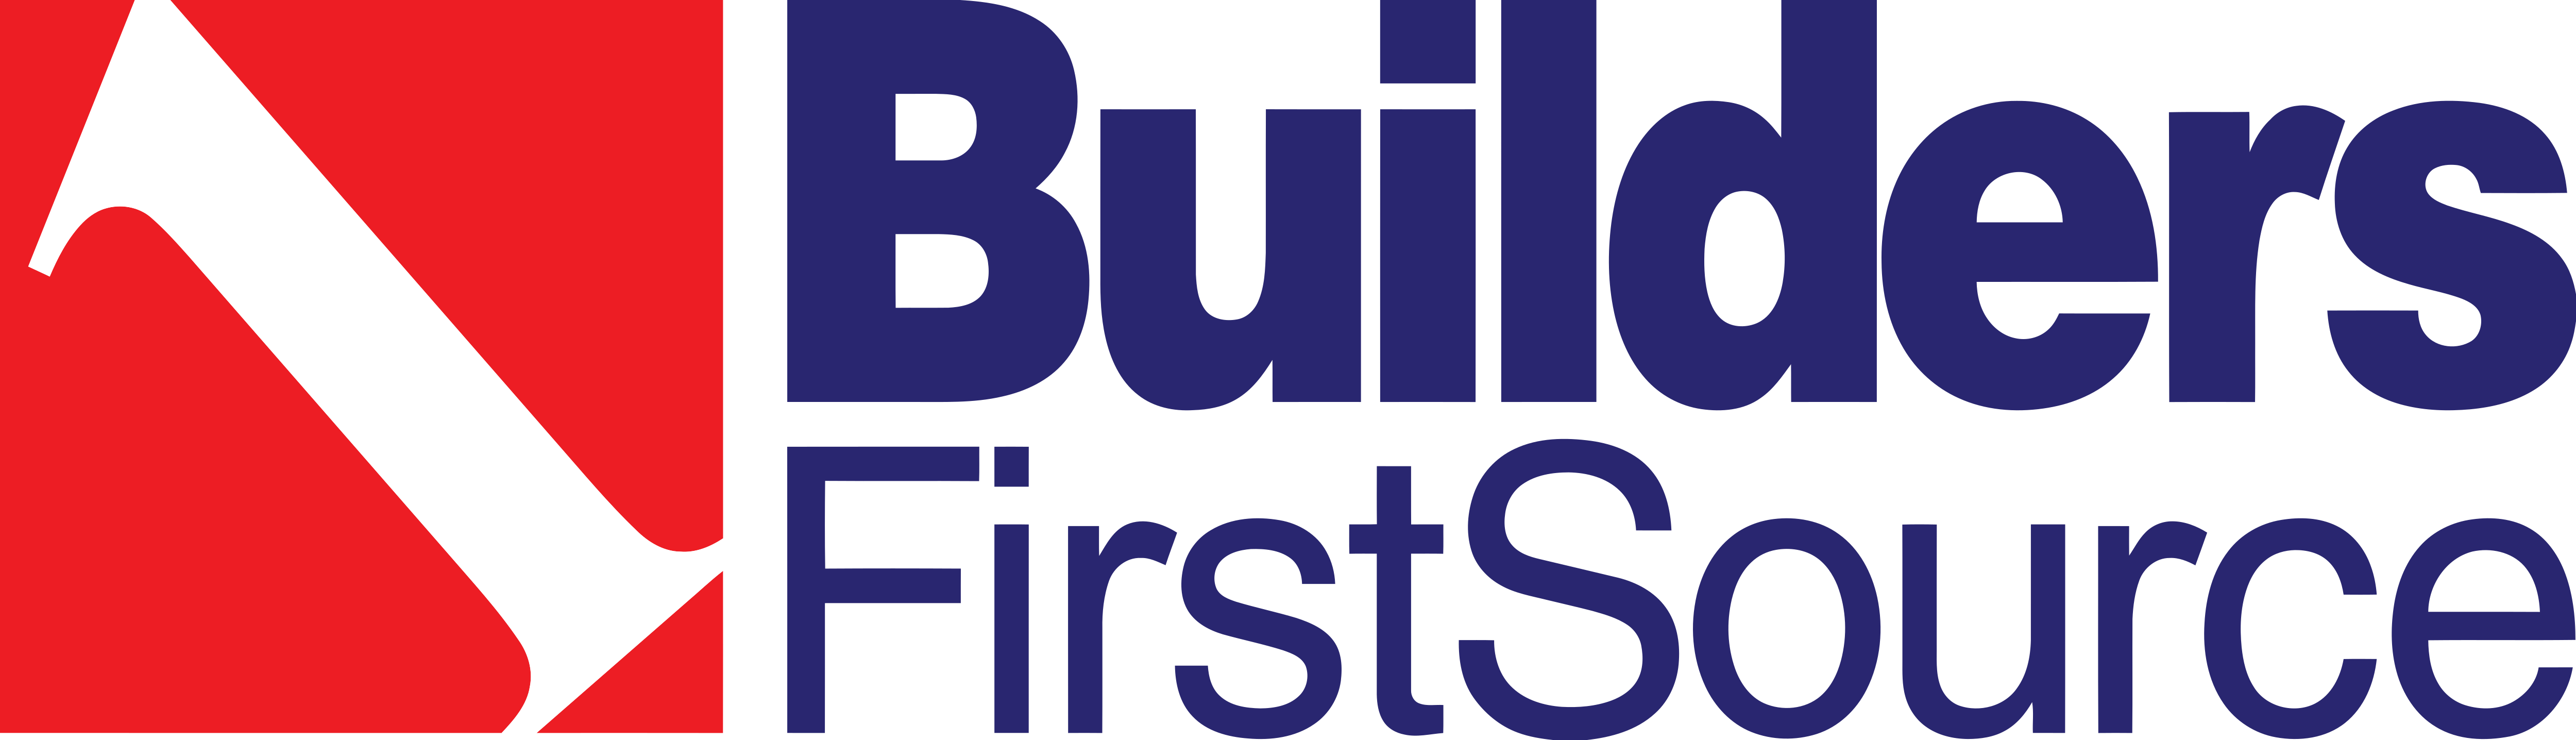 Builders Firstsource Logos Download